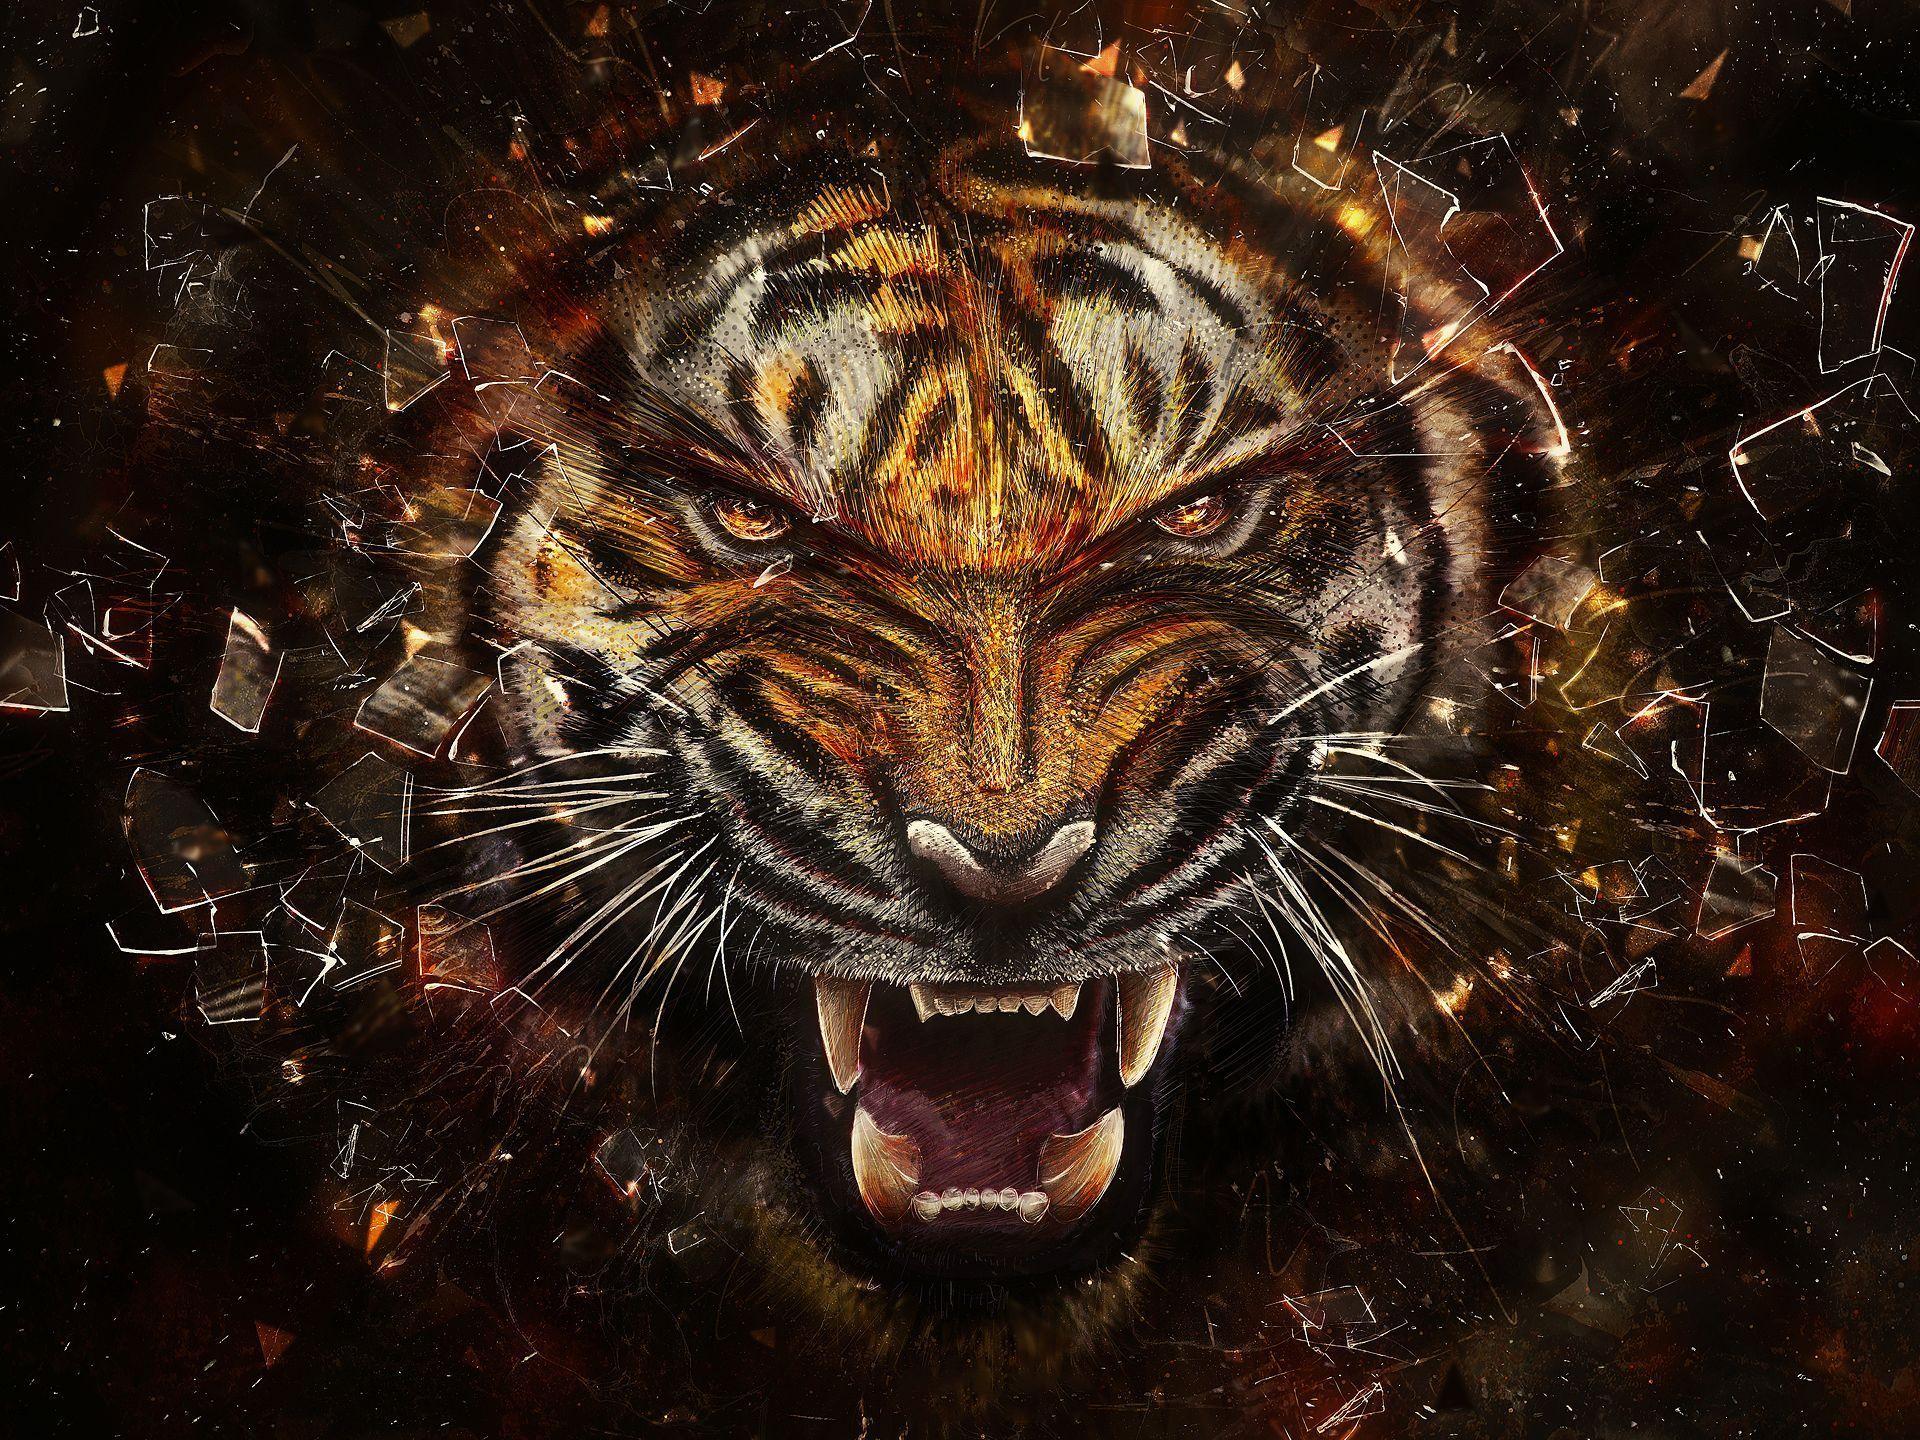 Angry Tiger. Tiger wallpaper, Tiger artwork, Tiger picture